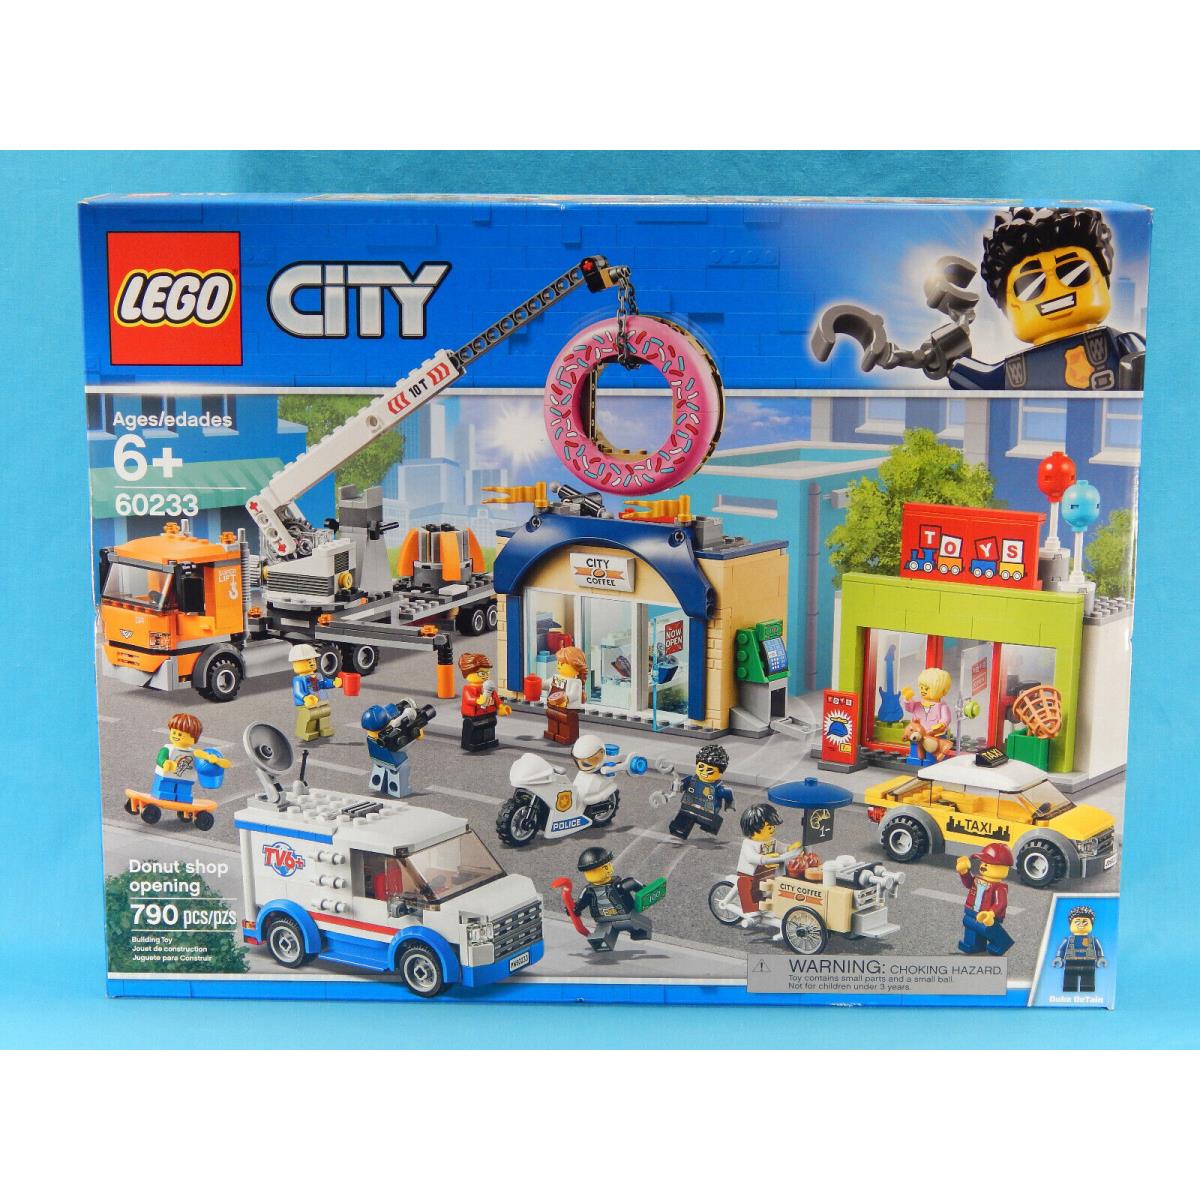 Lego City 60233 Donut Shop Opening 790pcs 2019 Duke Deta